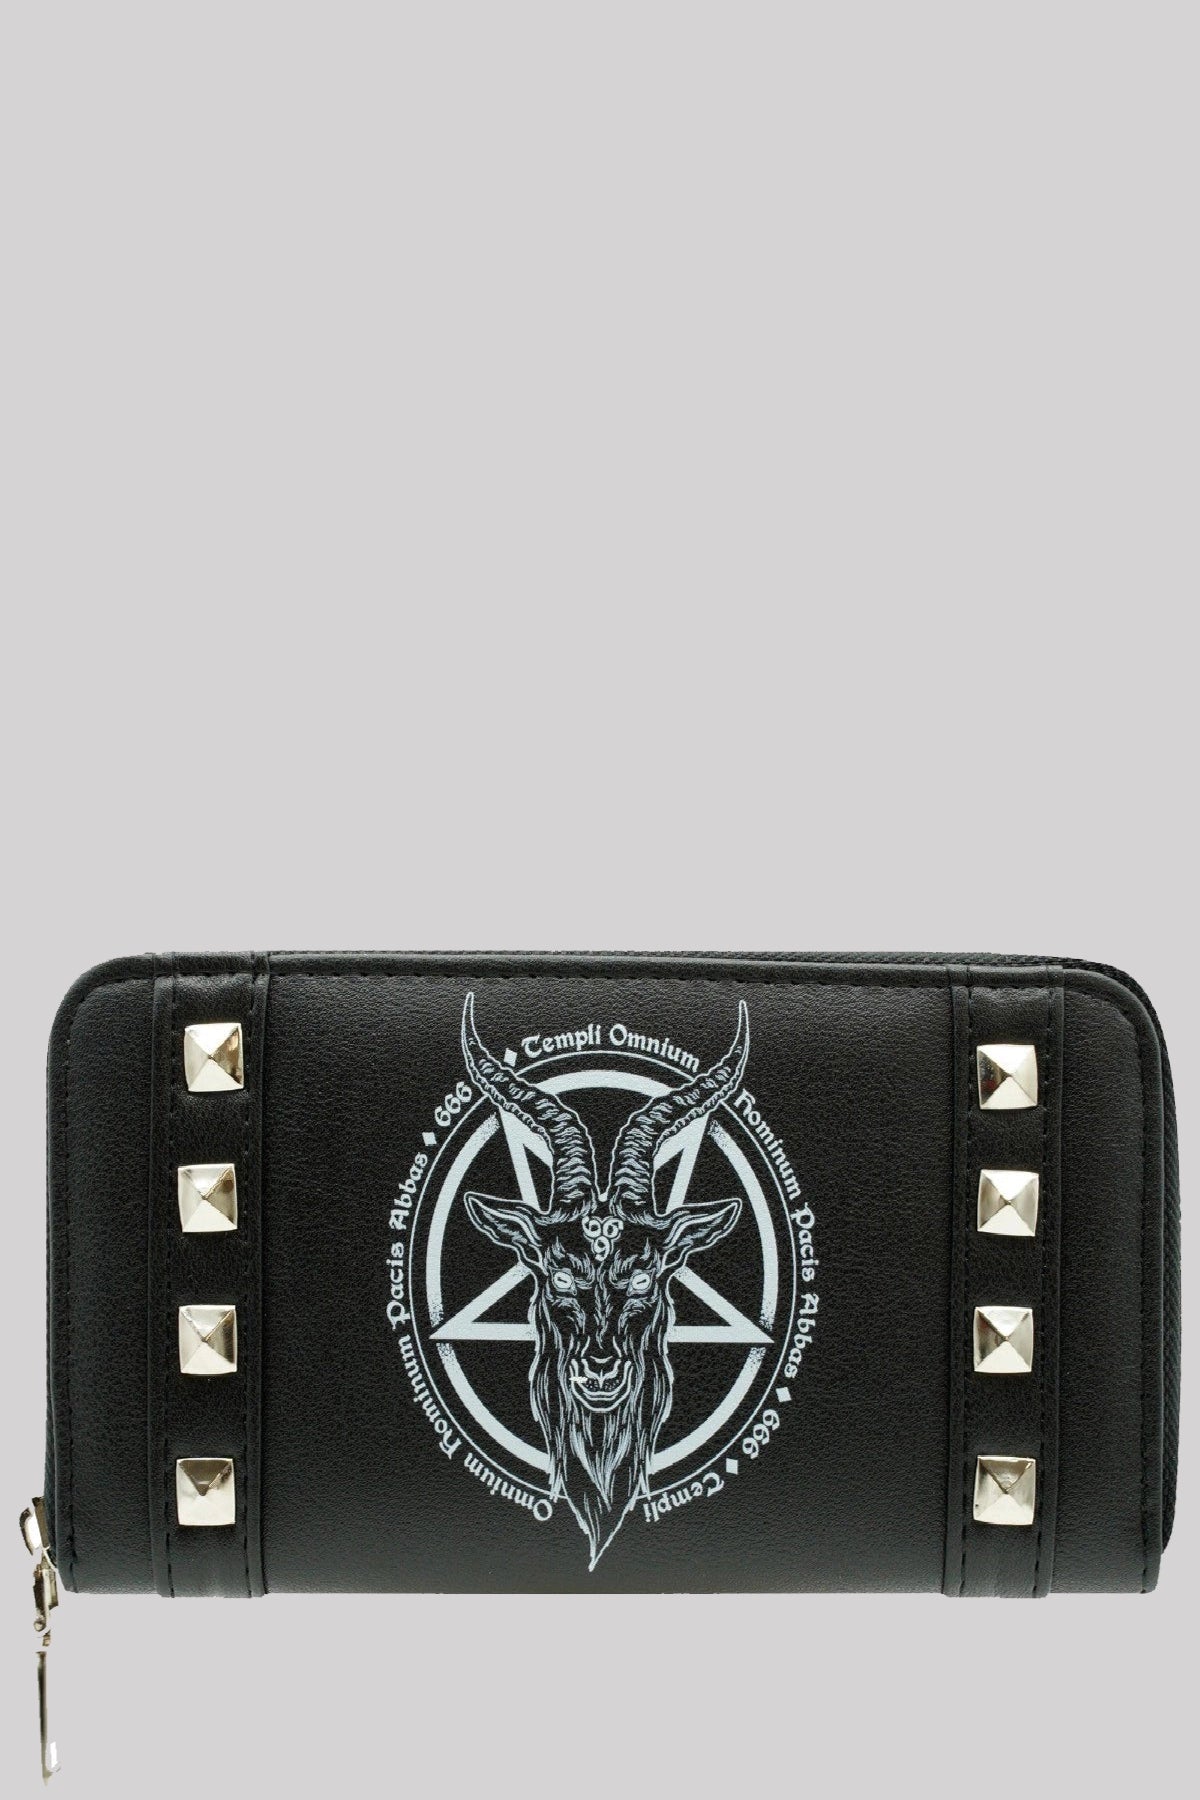 Ro Rox Omnium Baphomet 666 Goth Wallet